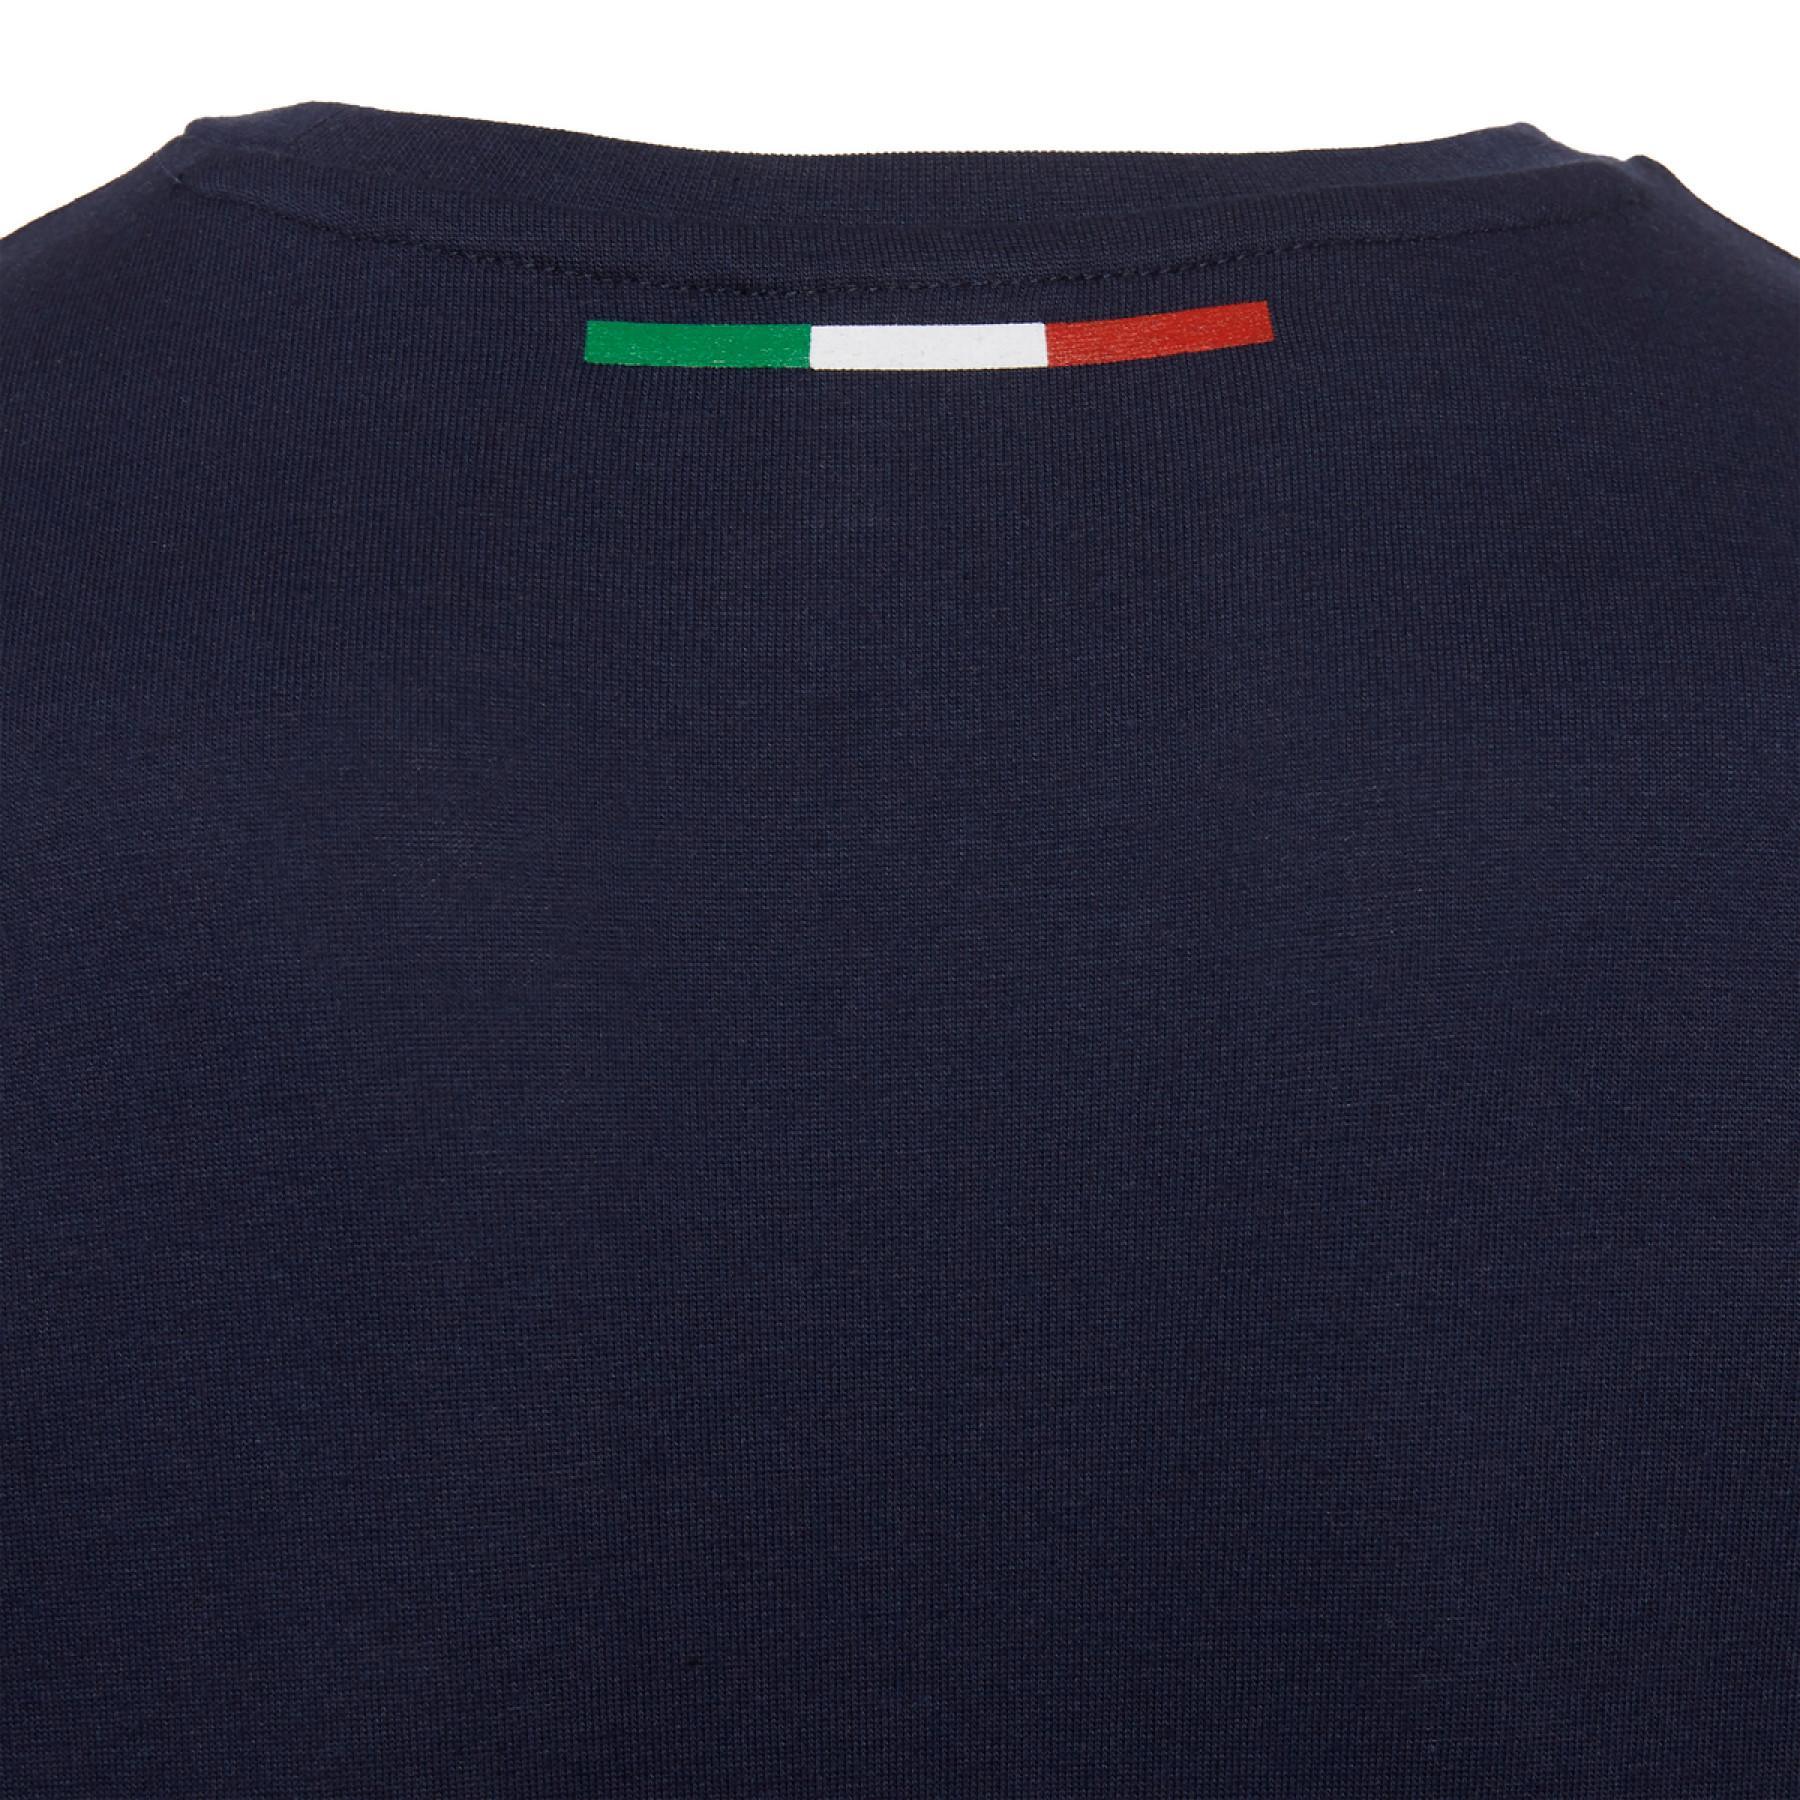 Fan T-shirt Italie rugby 2020/21